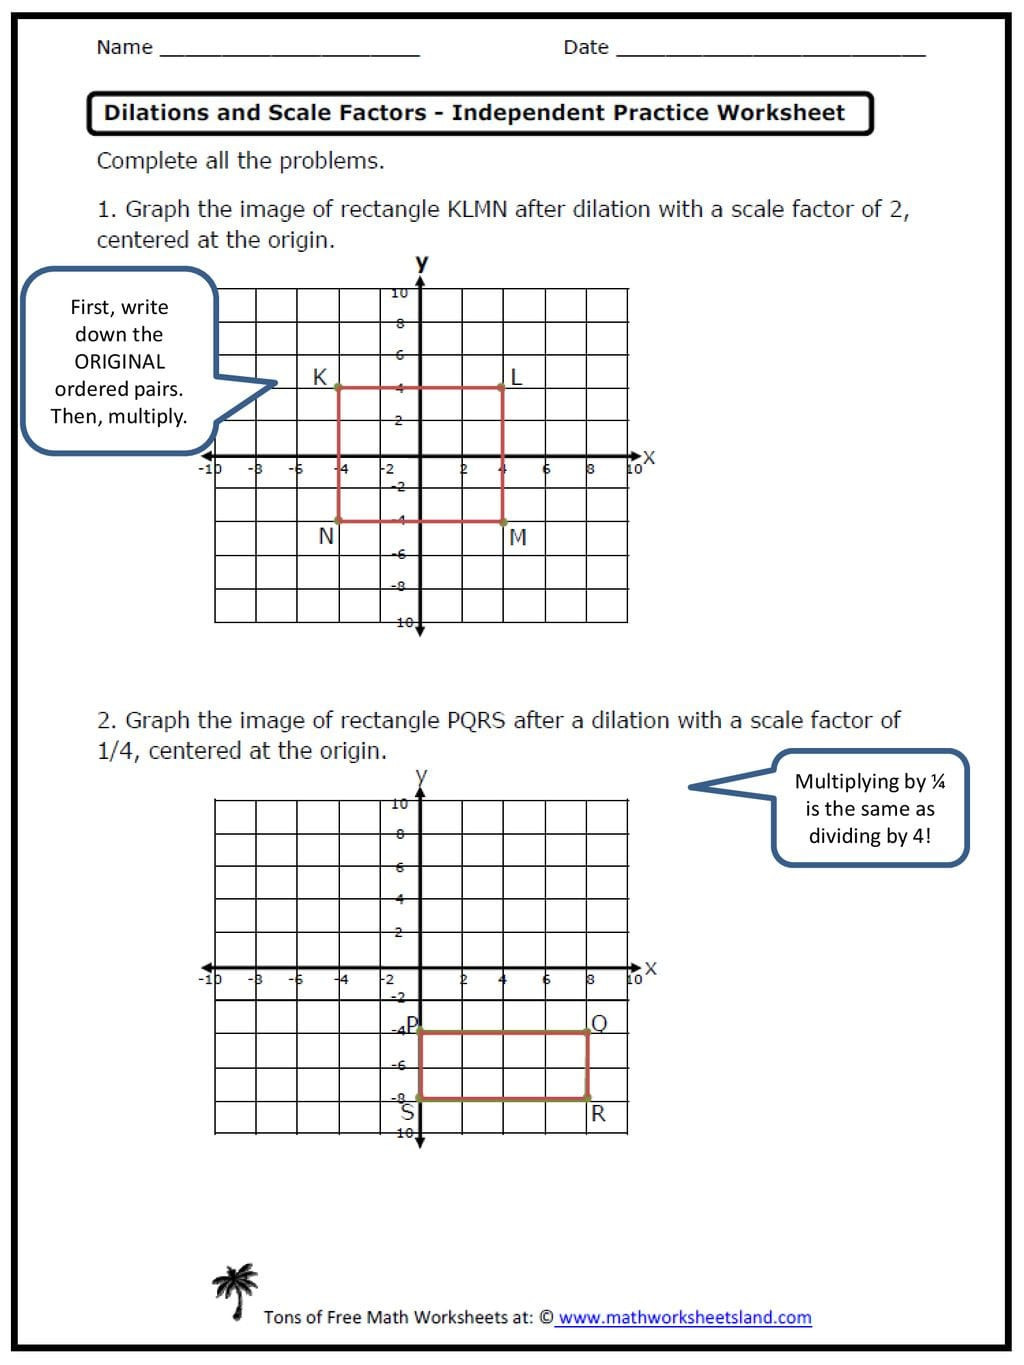 Dilations and Scale Factor Worksheet Printable Dilation Worksheets